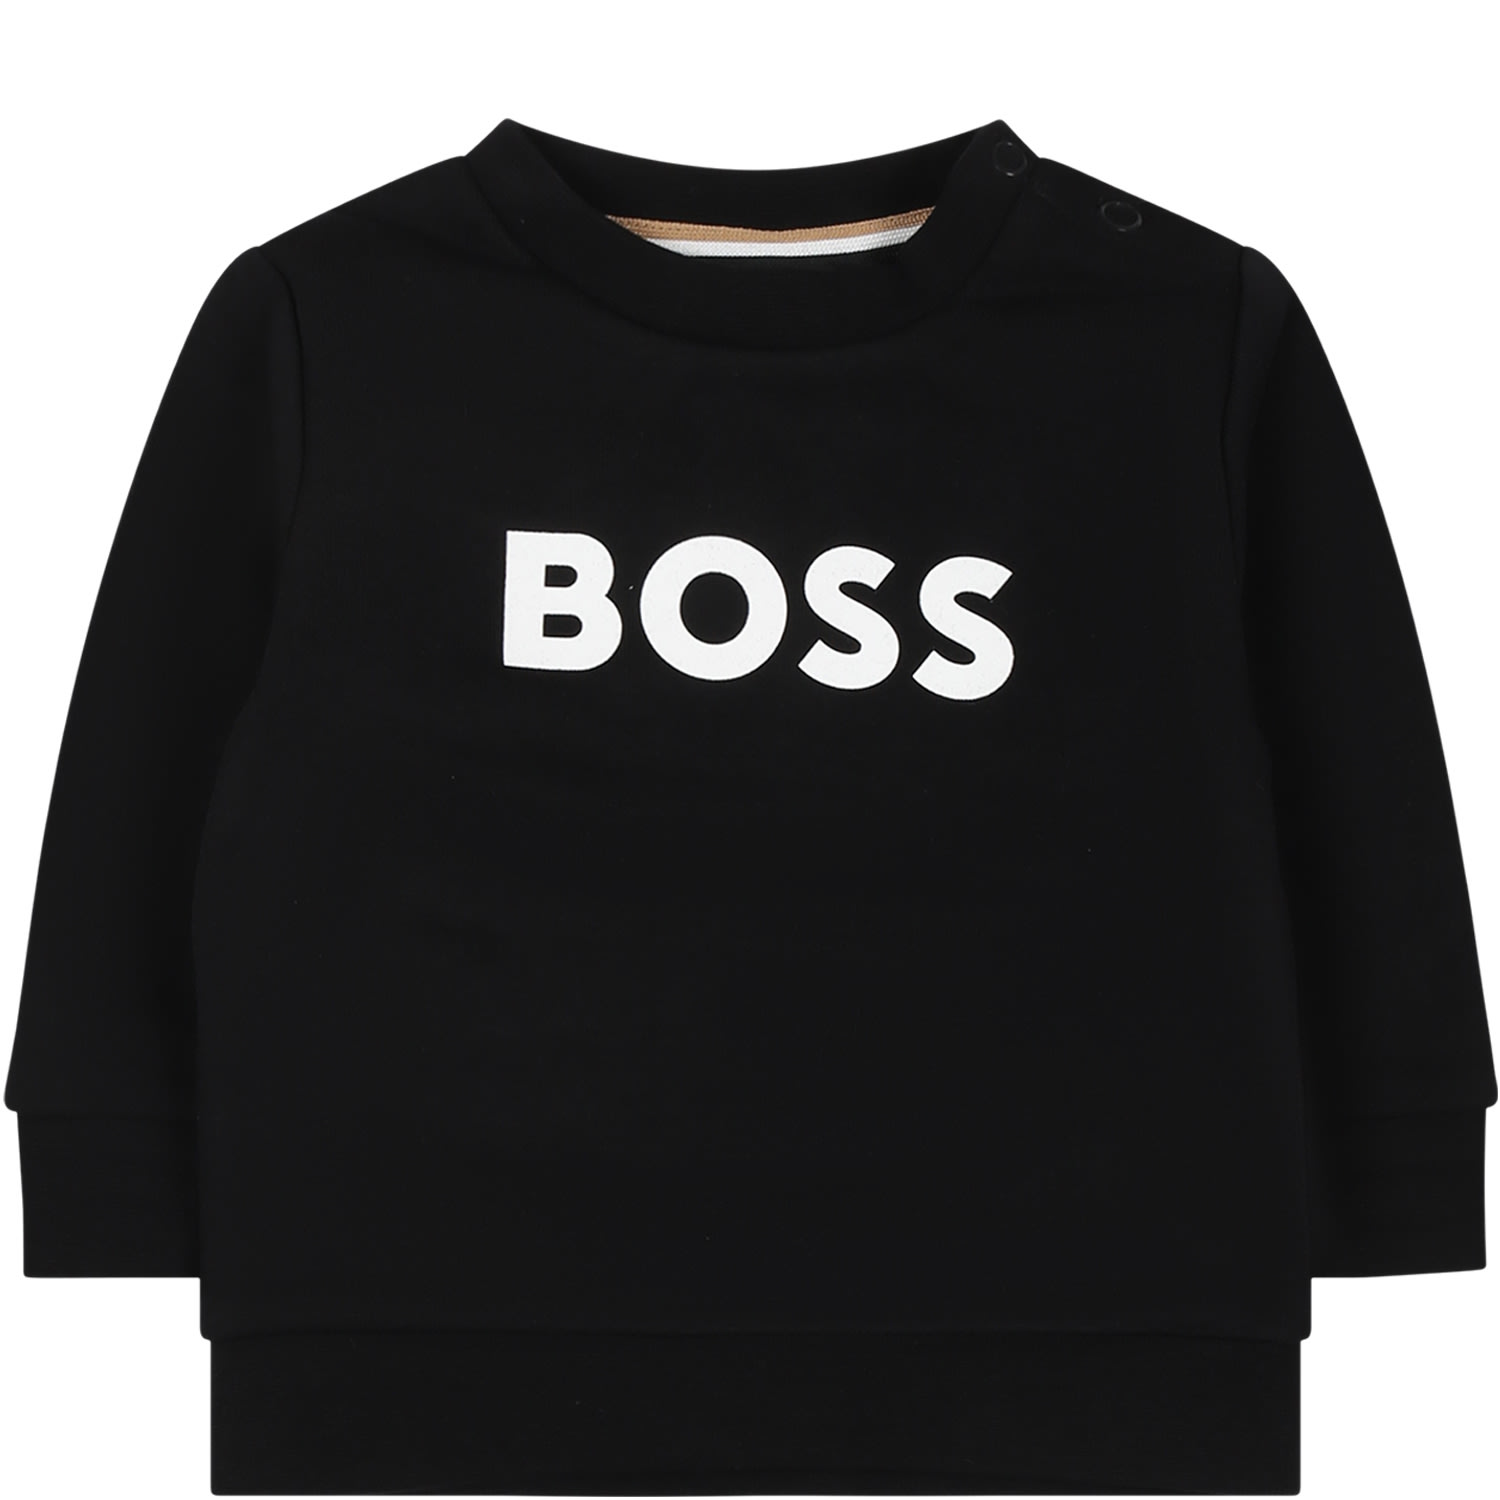 Hugo Boss Kids' Black Sweatshirt With Logo For Baby Boy